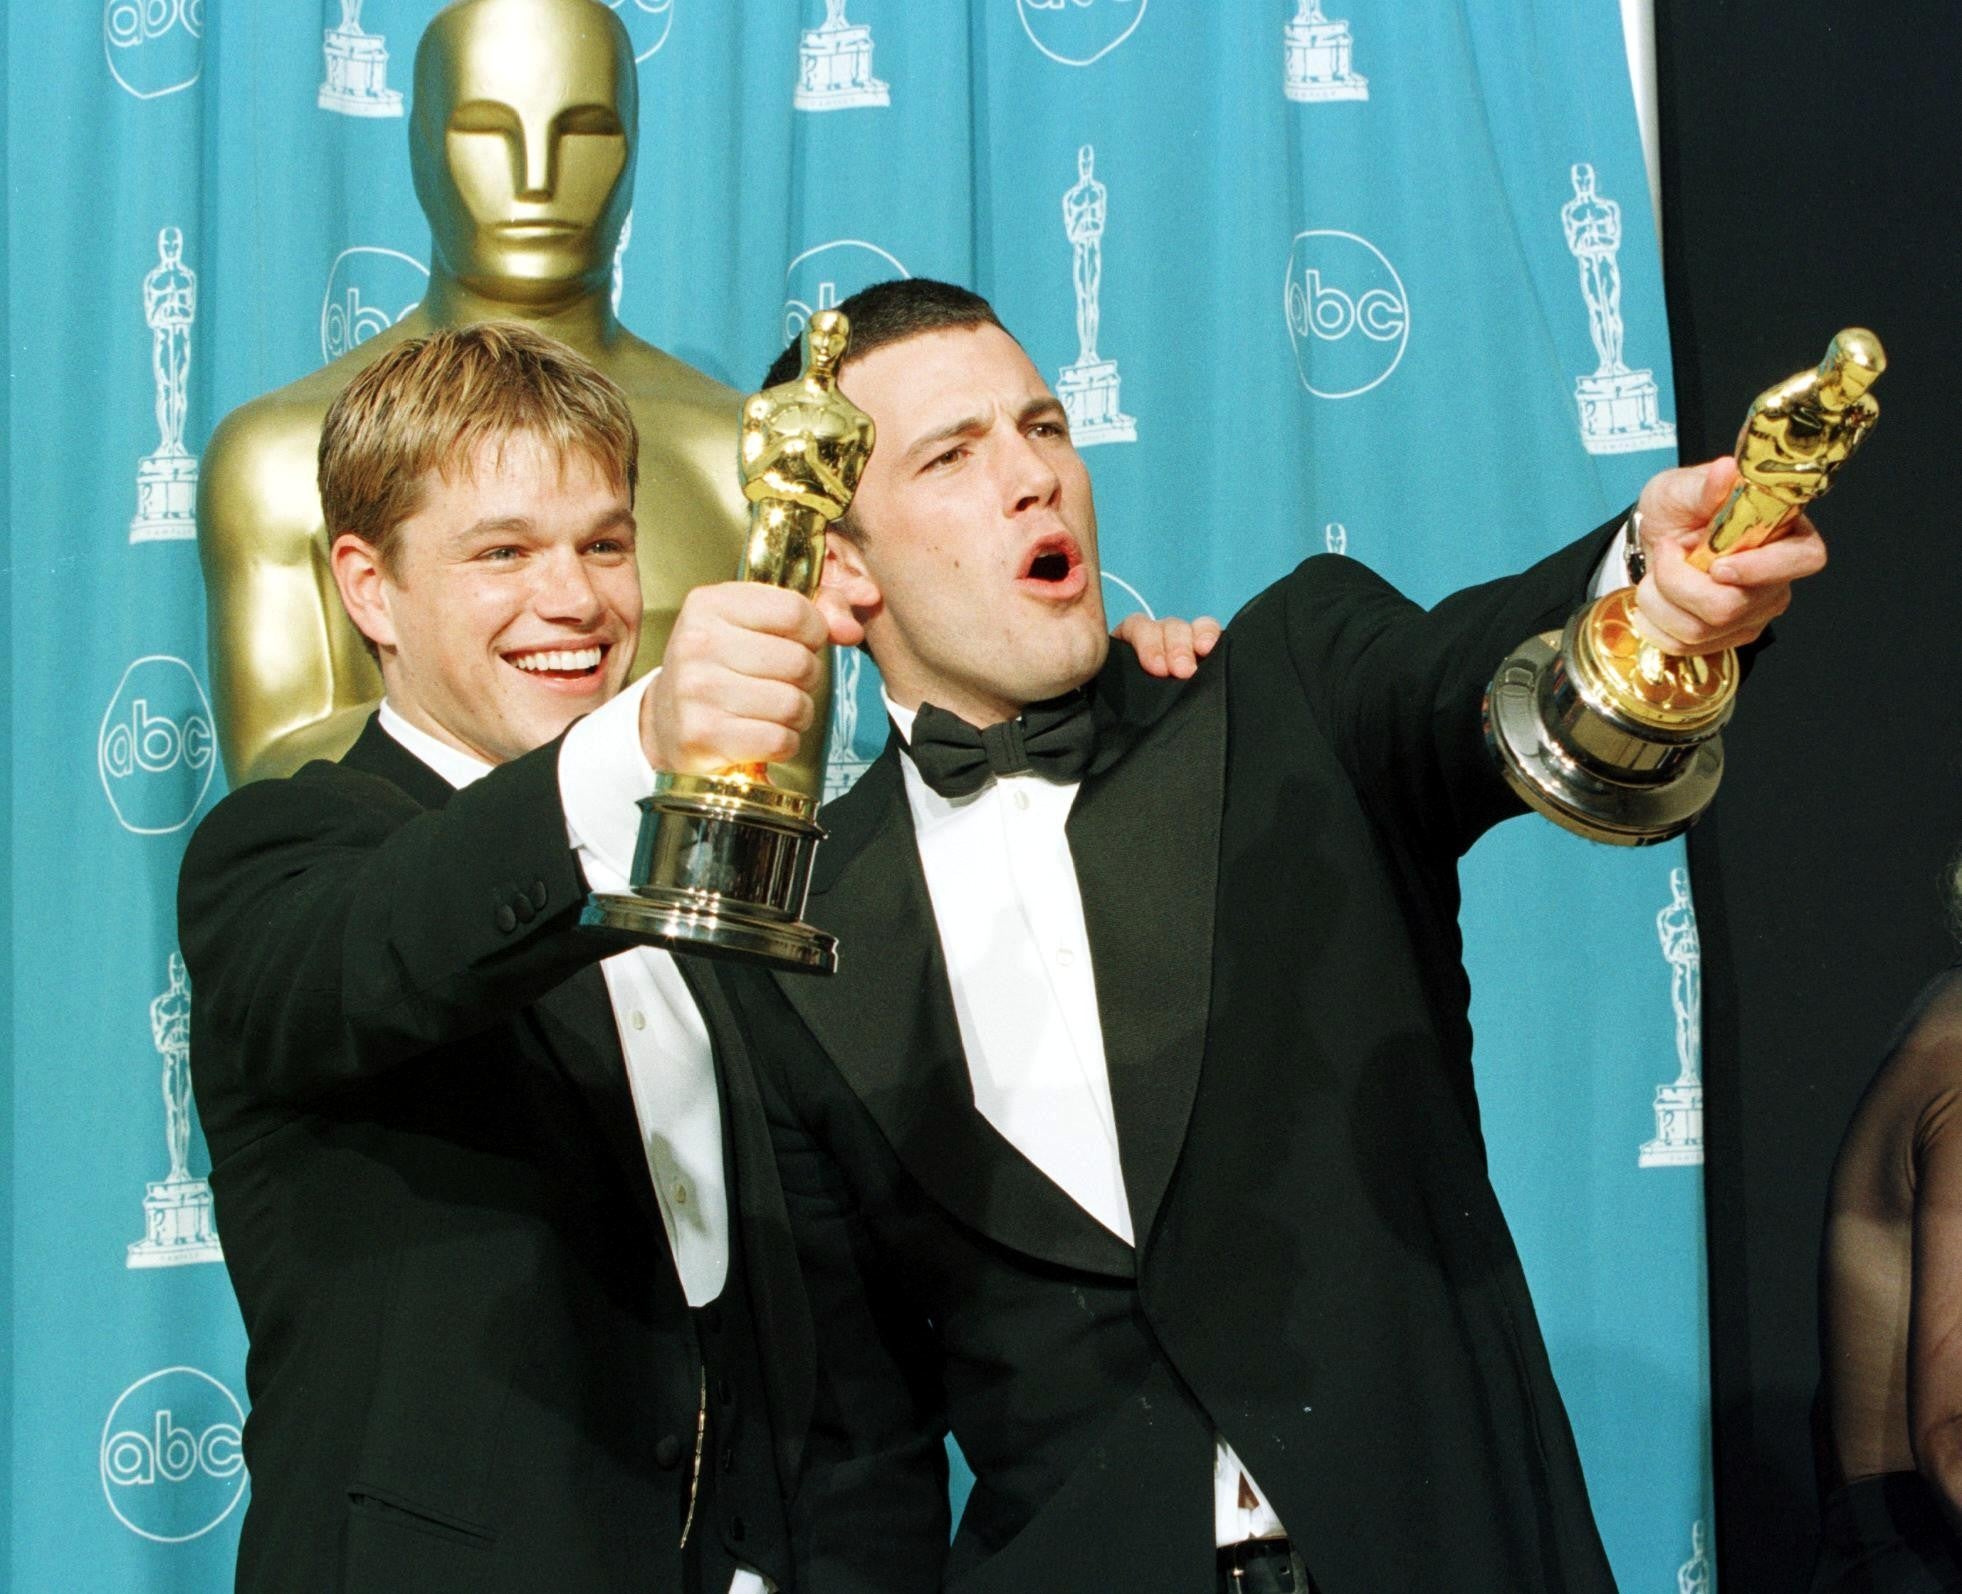 Matt Damon and Ben Affleck winning Oscars for their performances in Good Will Hunting